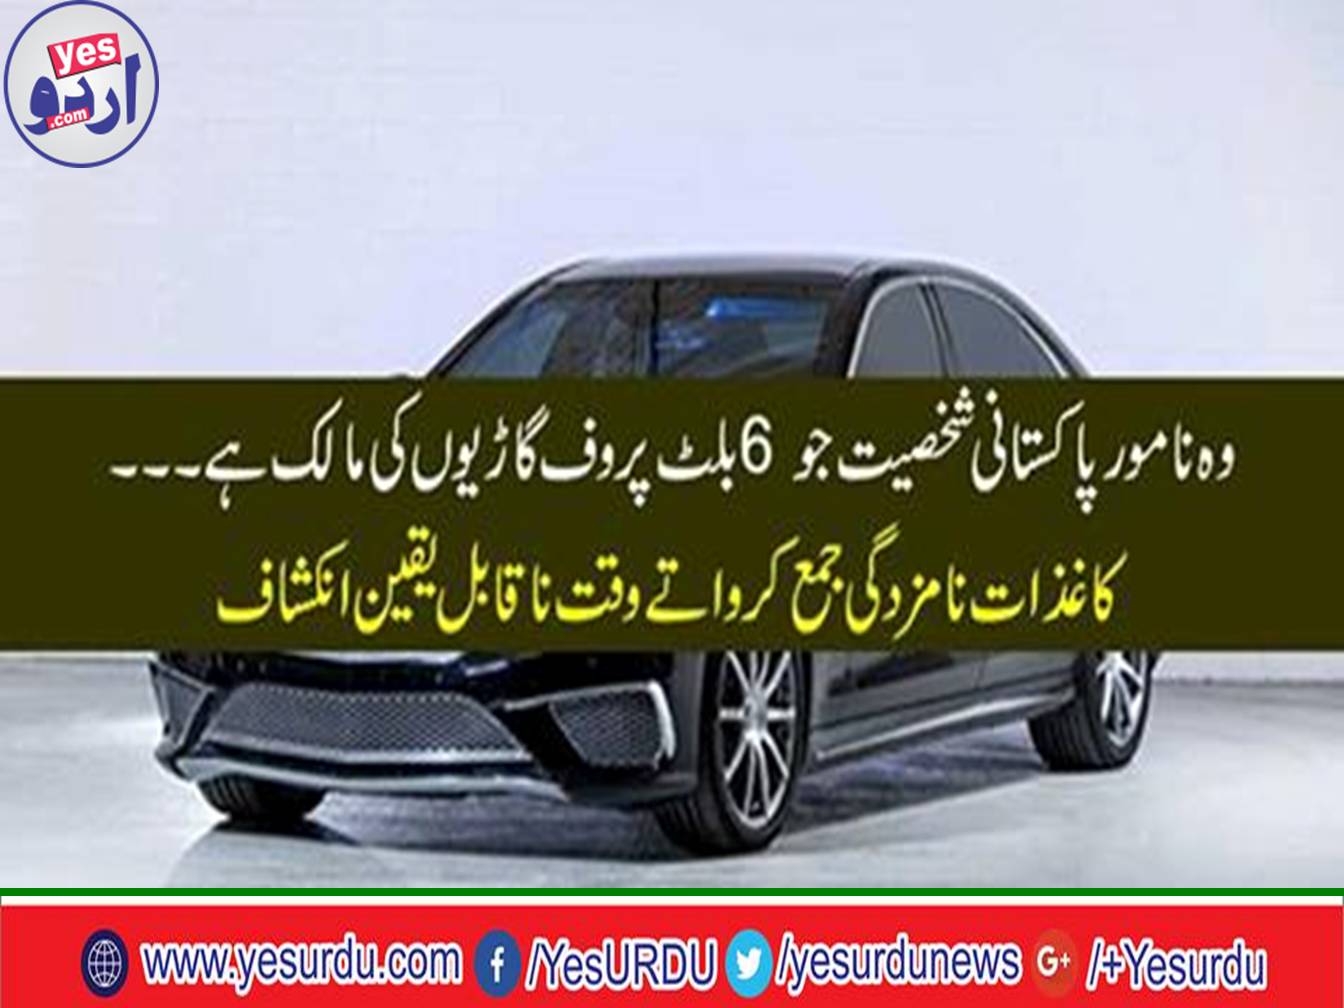 Asif Ali Zardari owns 6 built proof luxury vehicles